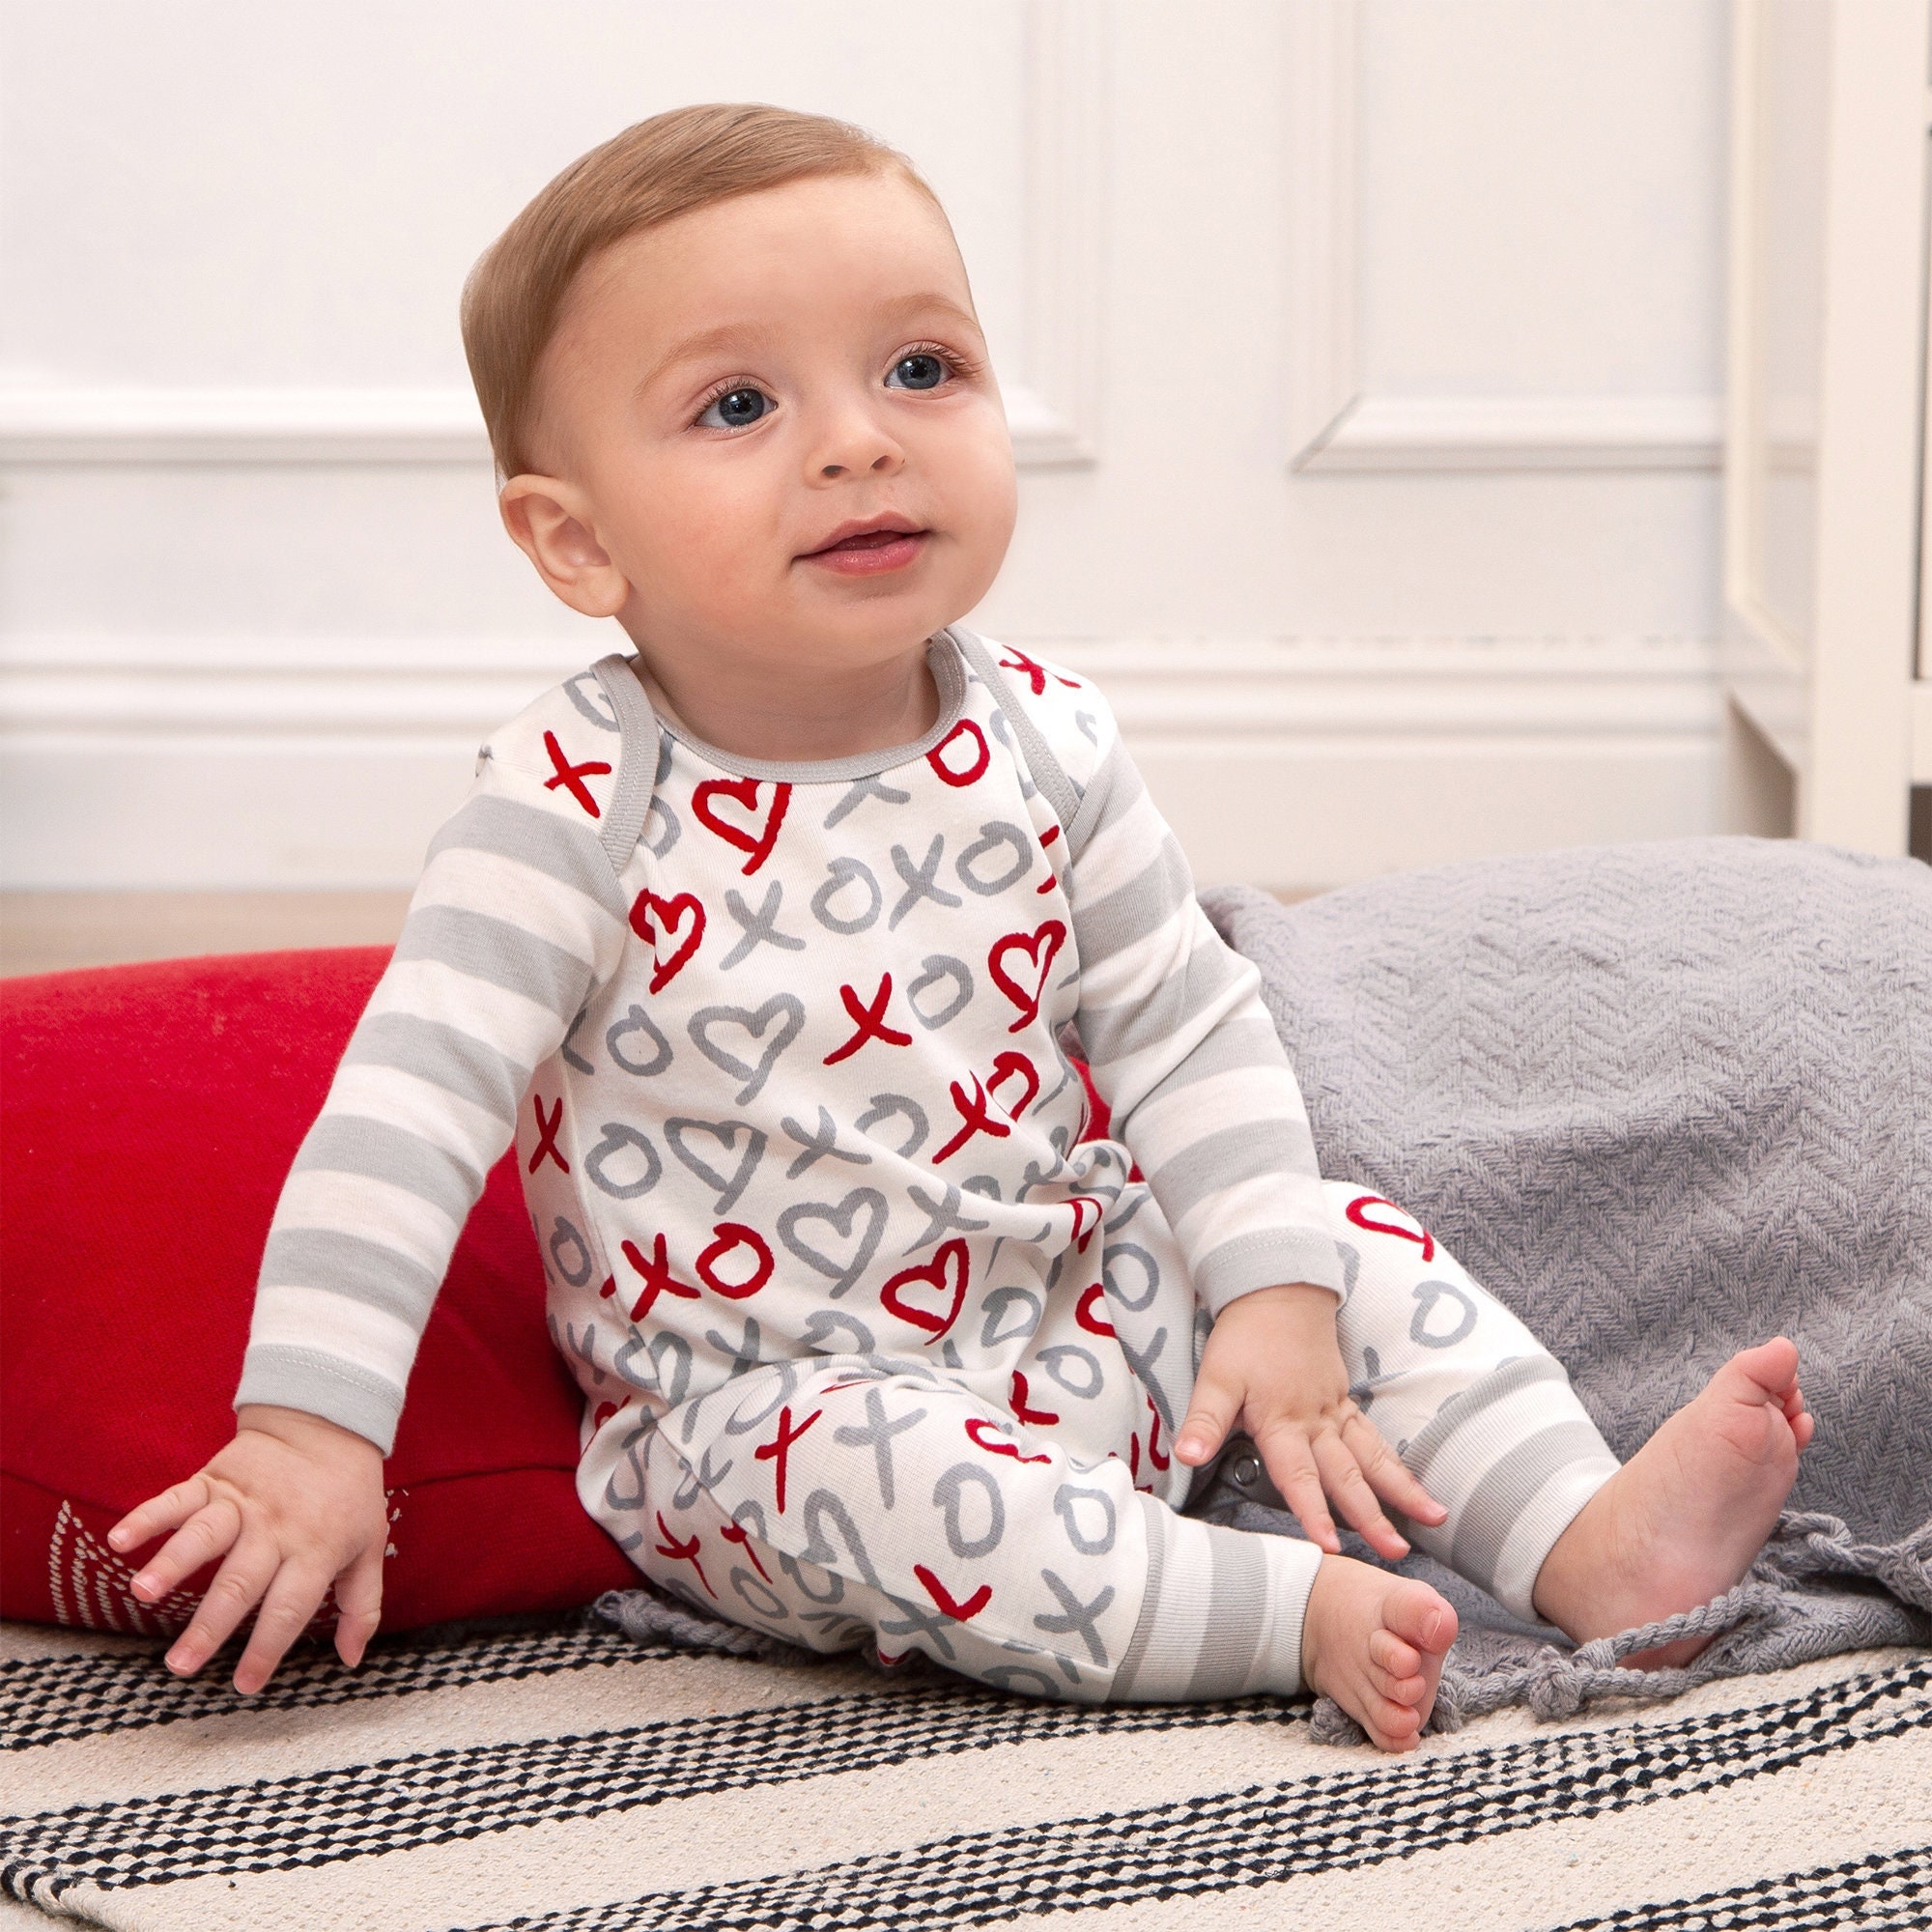 Infant Newborn Baby Optional Jumpsuit Romper Red White Dots Heart Print NB-12M 